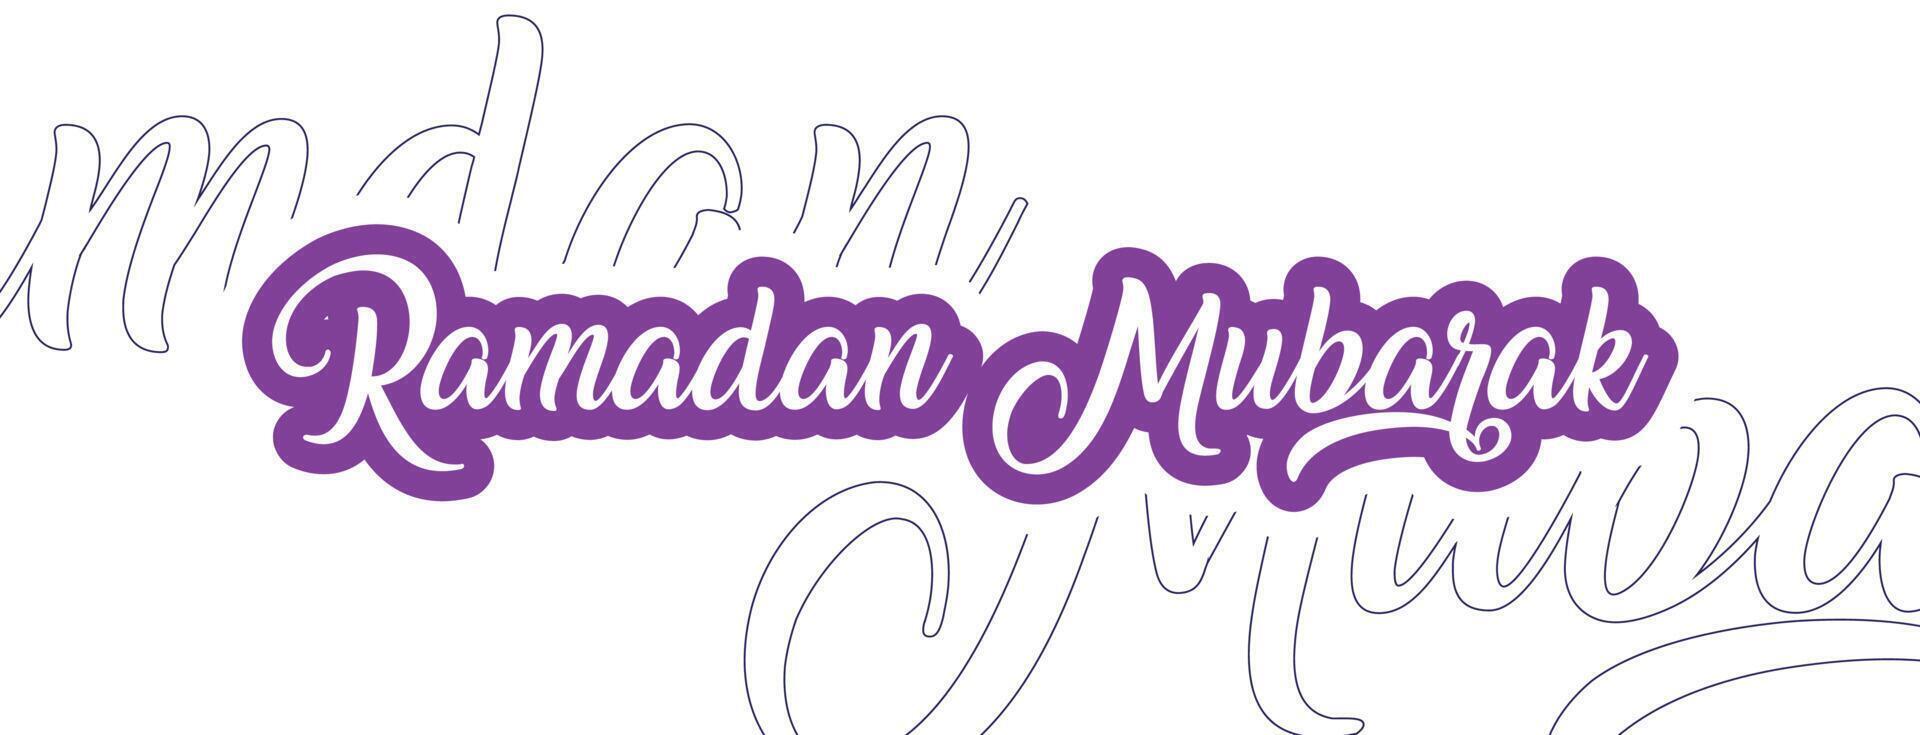 ramadan mubarak i kalligrafi stil vektor